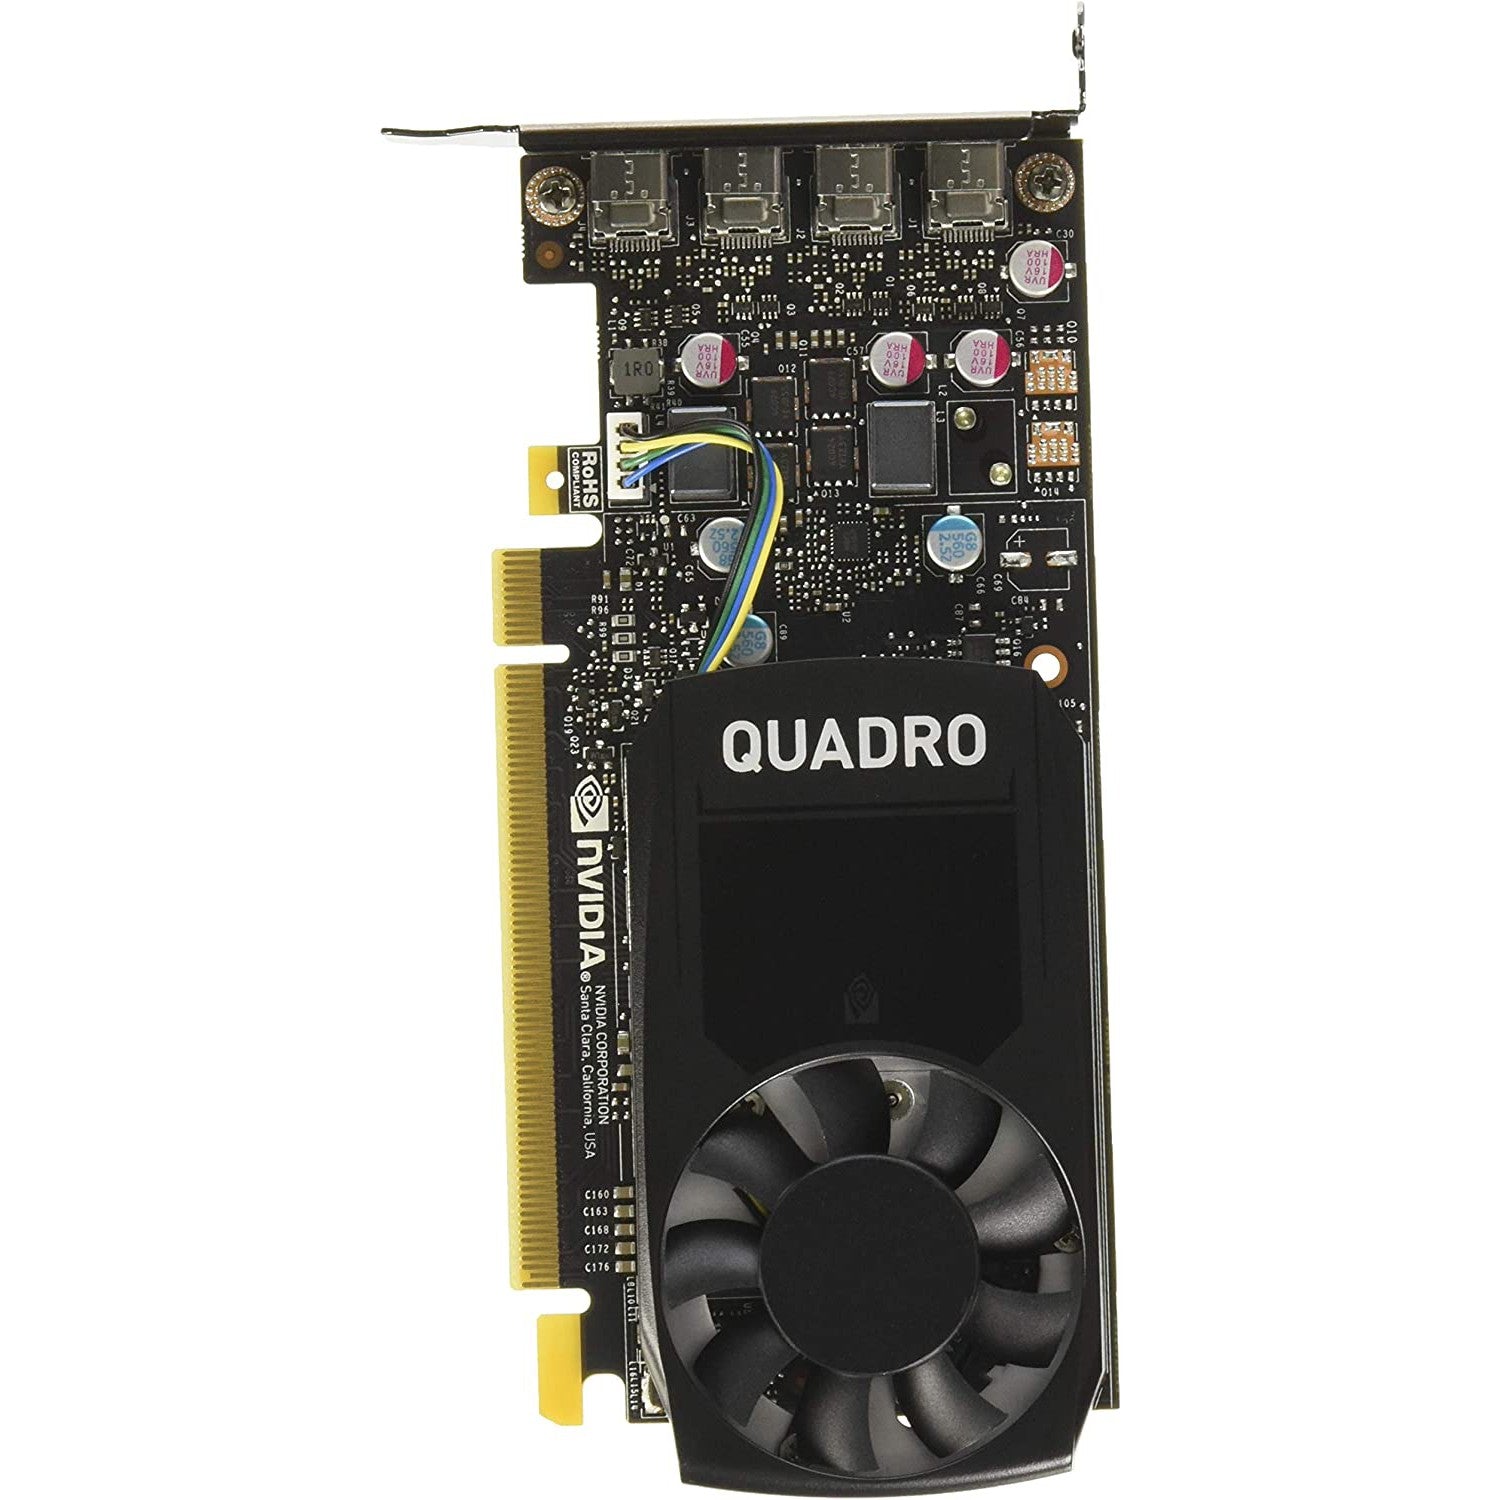 Nvidia Quadro P620 2GB GDDR5 Graphics Card